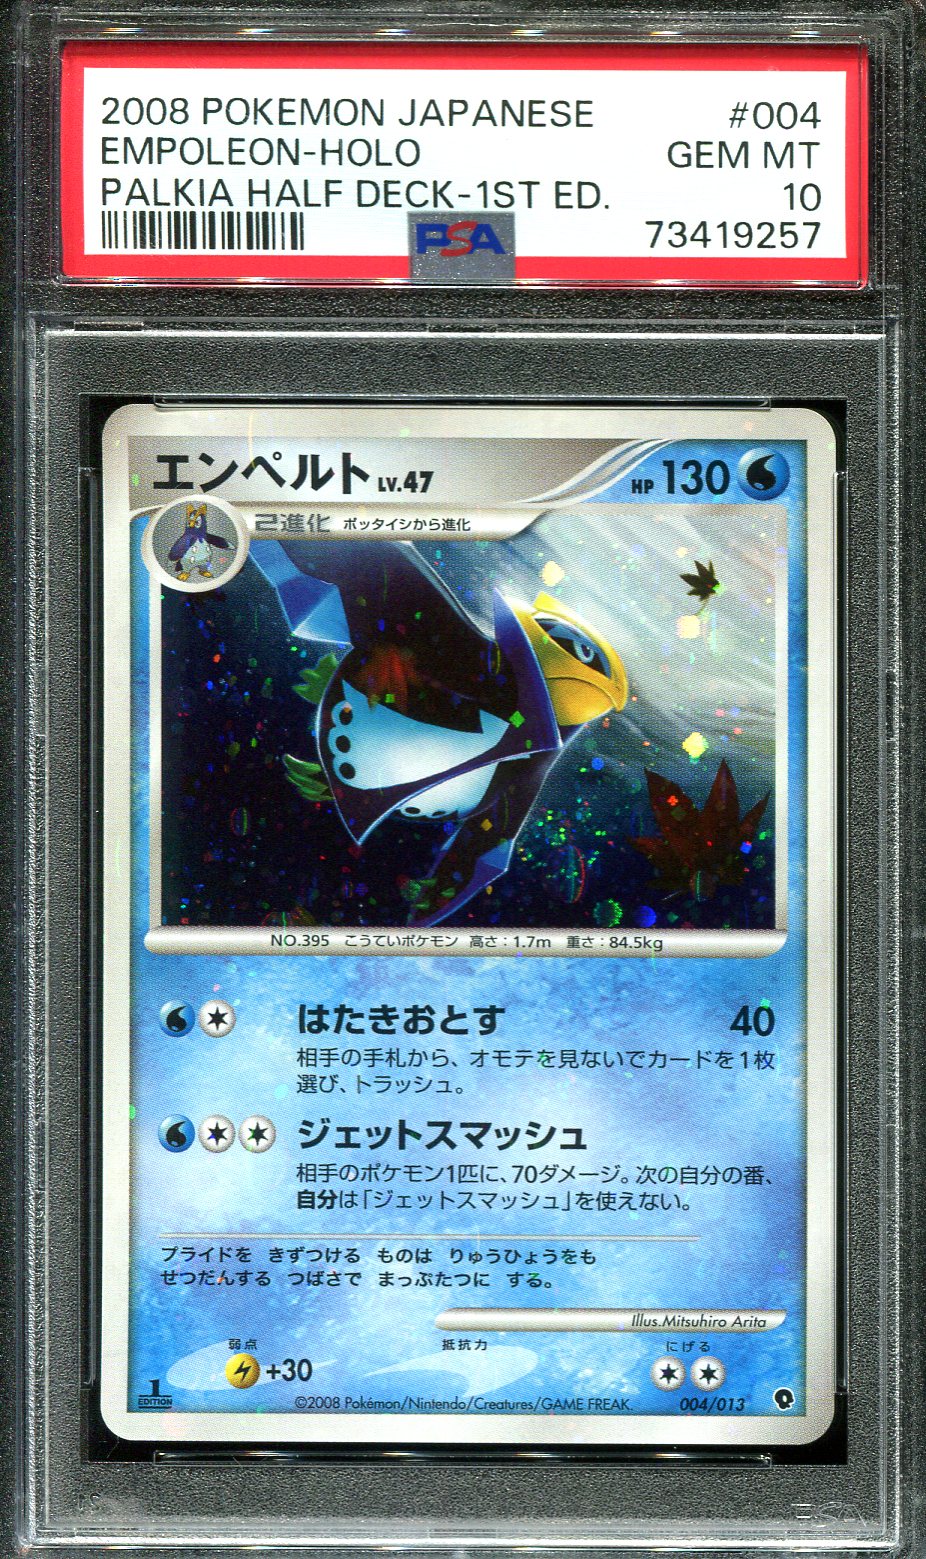 PSA 10] Pokemon Card Japanese Palkia LV.X DP3 Constrctd.S.D. from